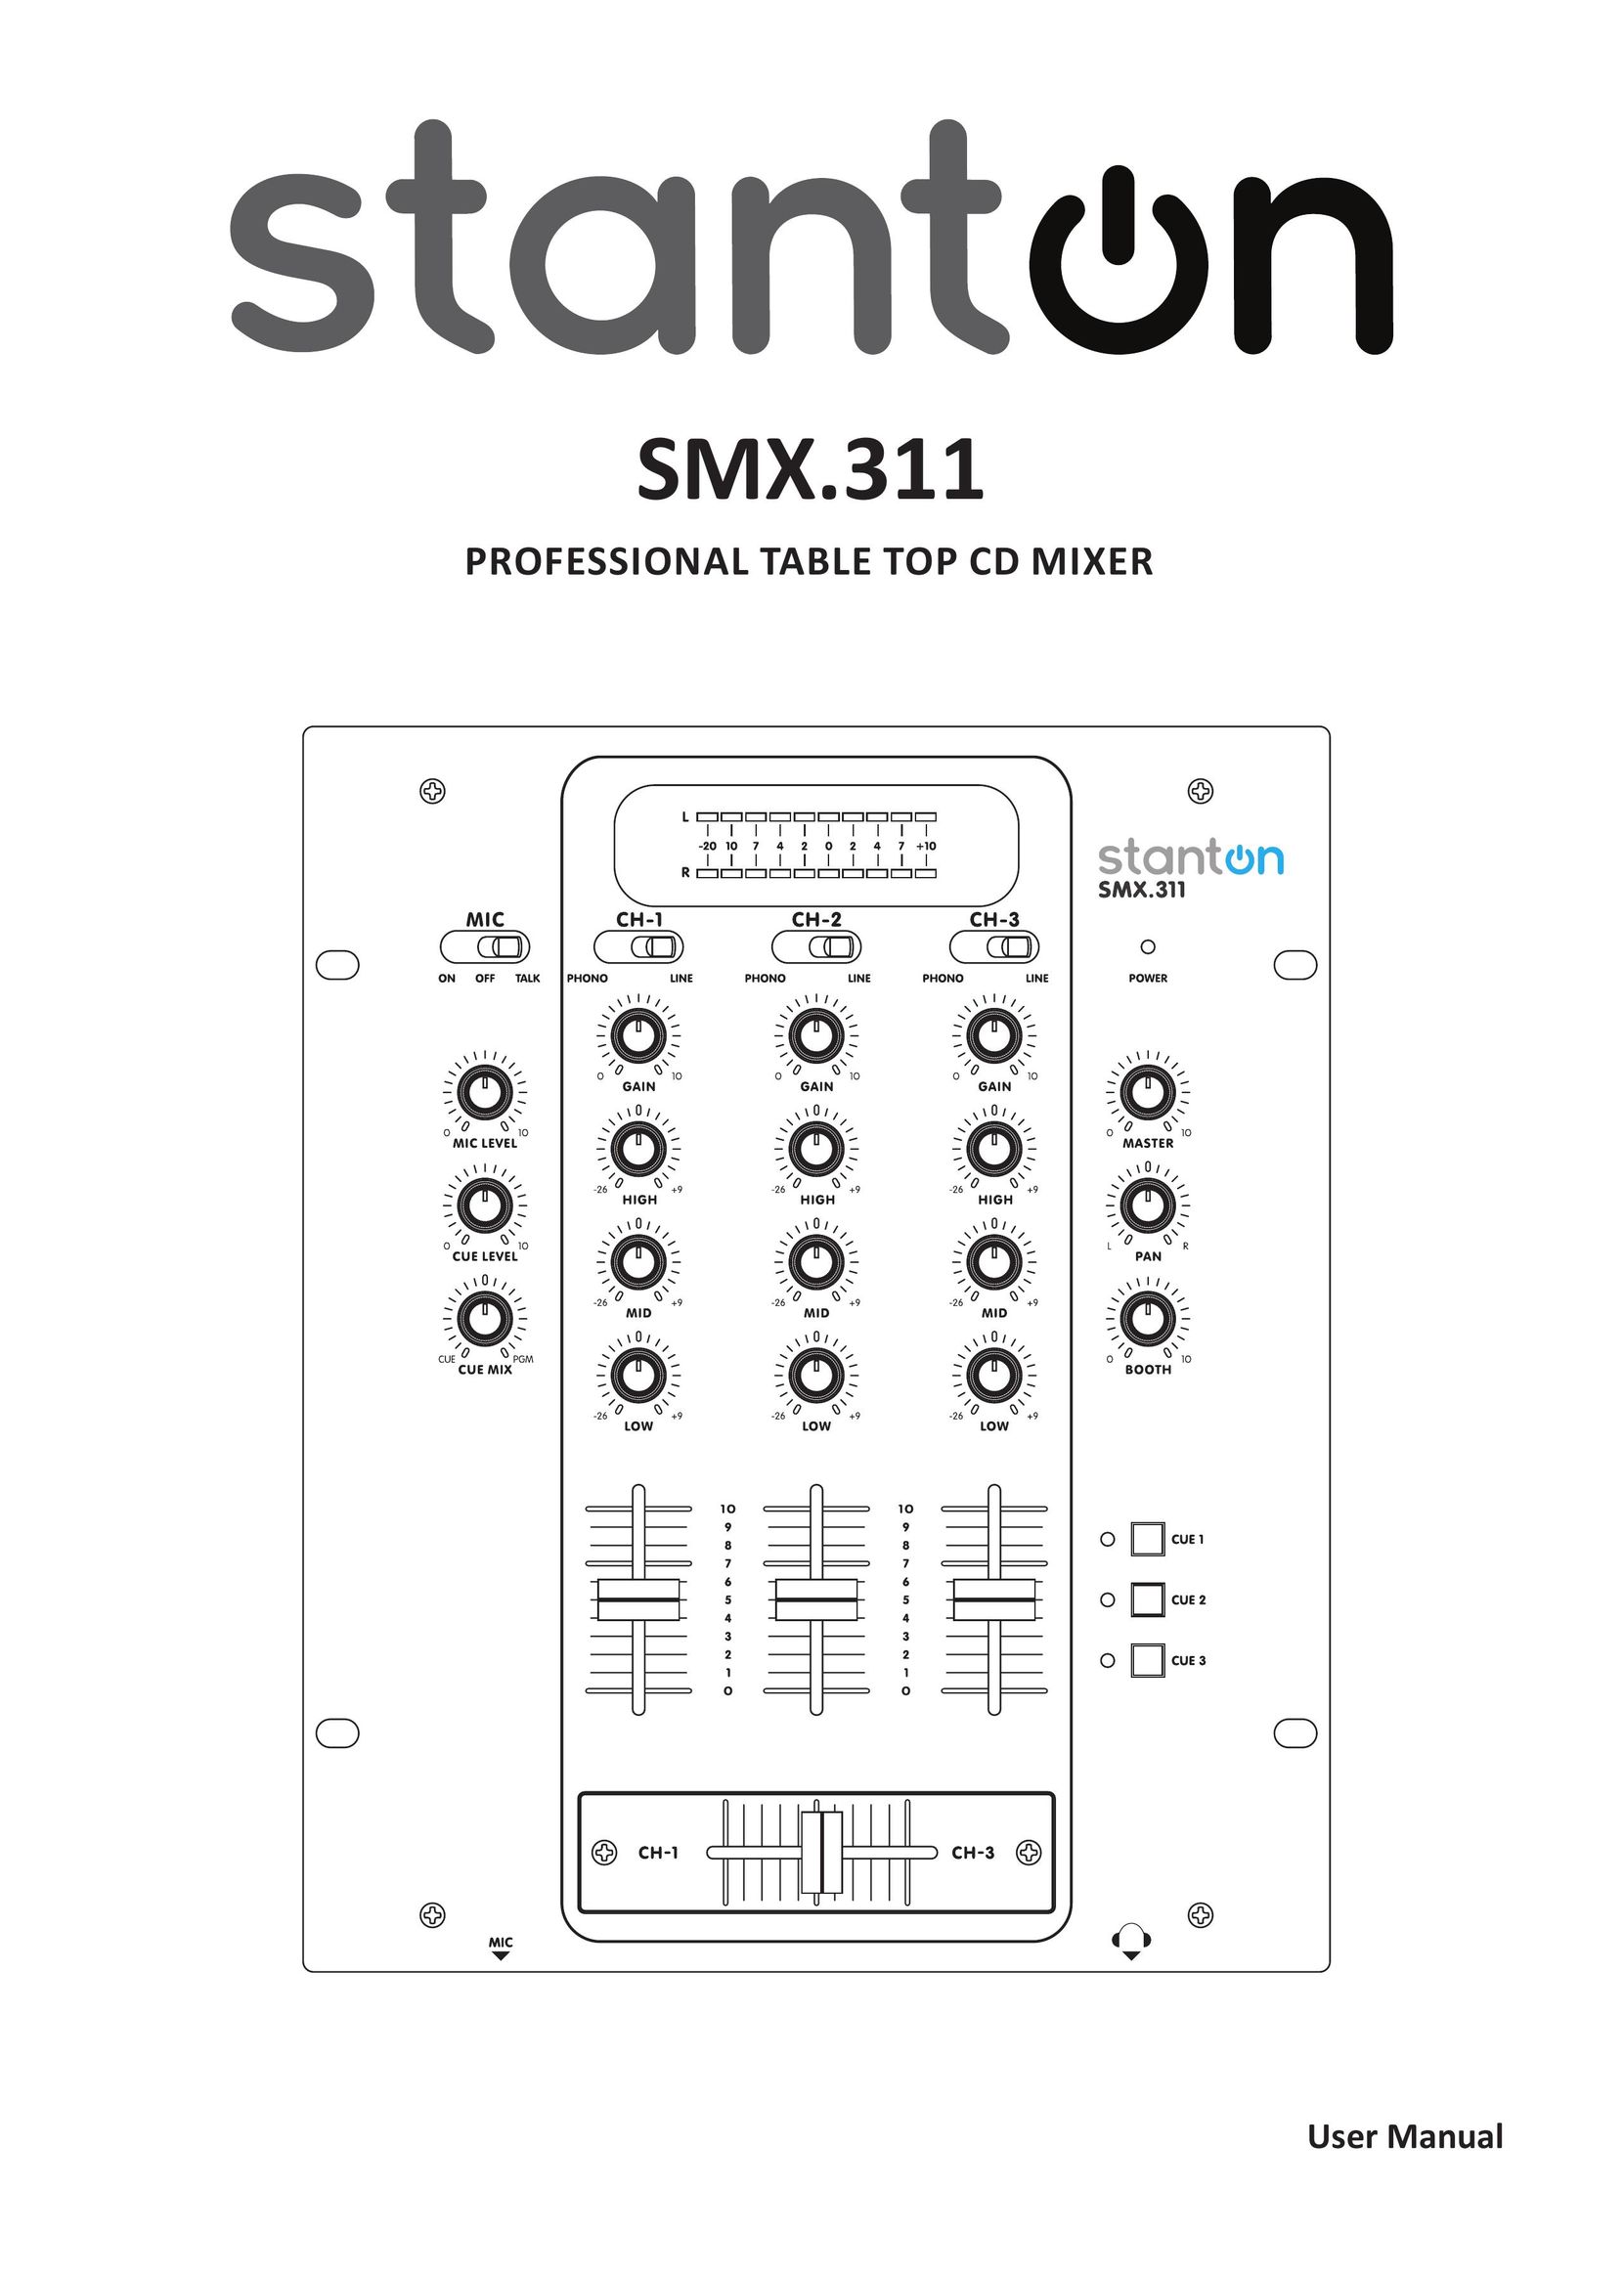 Stanton SMX.311 CD Player User Manual